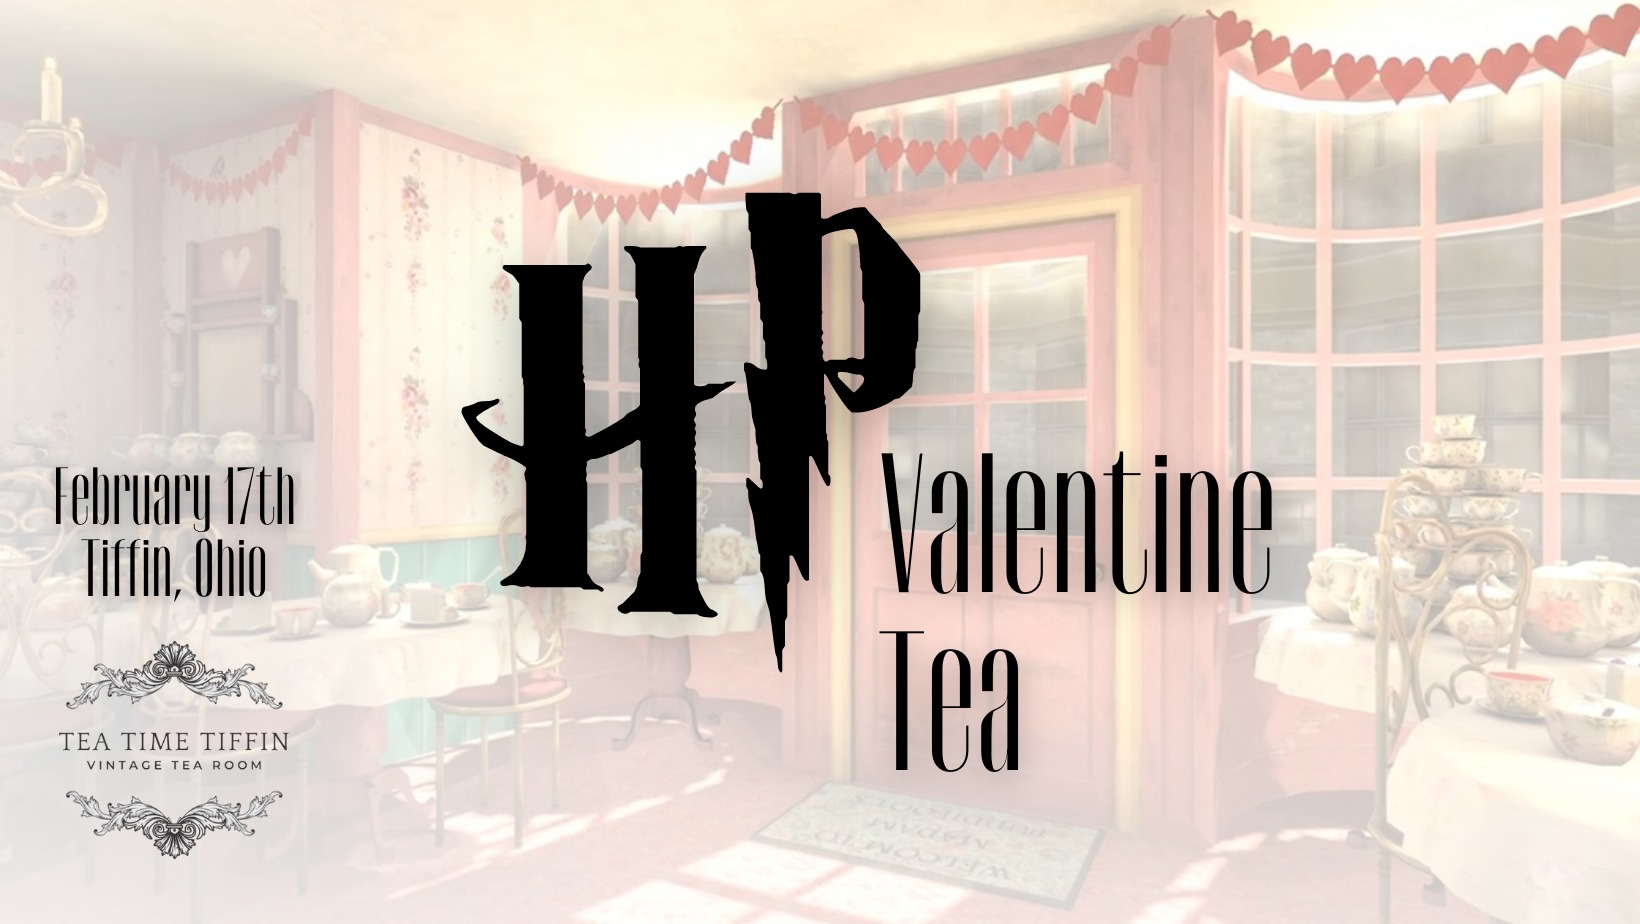 HP Valentine Tea Party